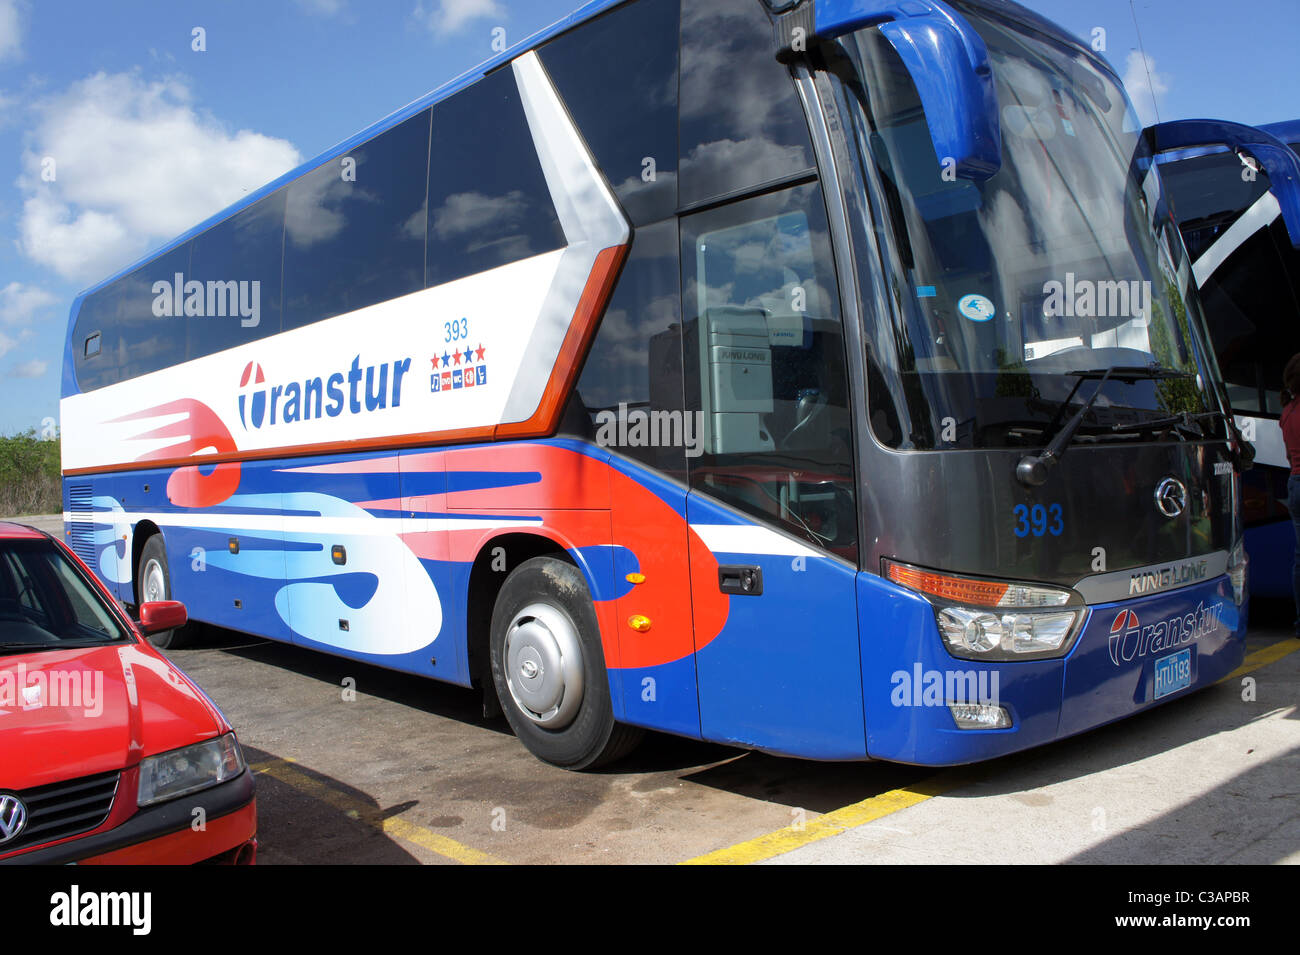 Chinese made Transtur Cuban tourist bus. Stock Photo